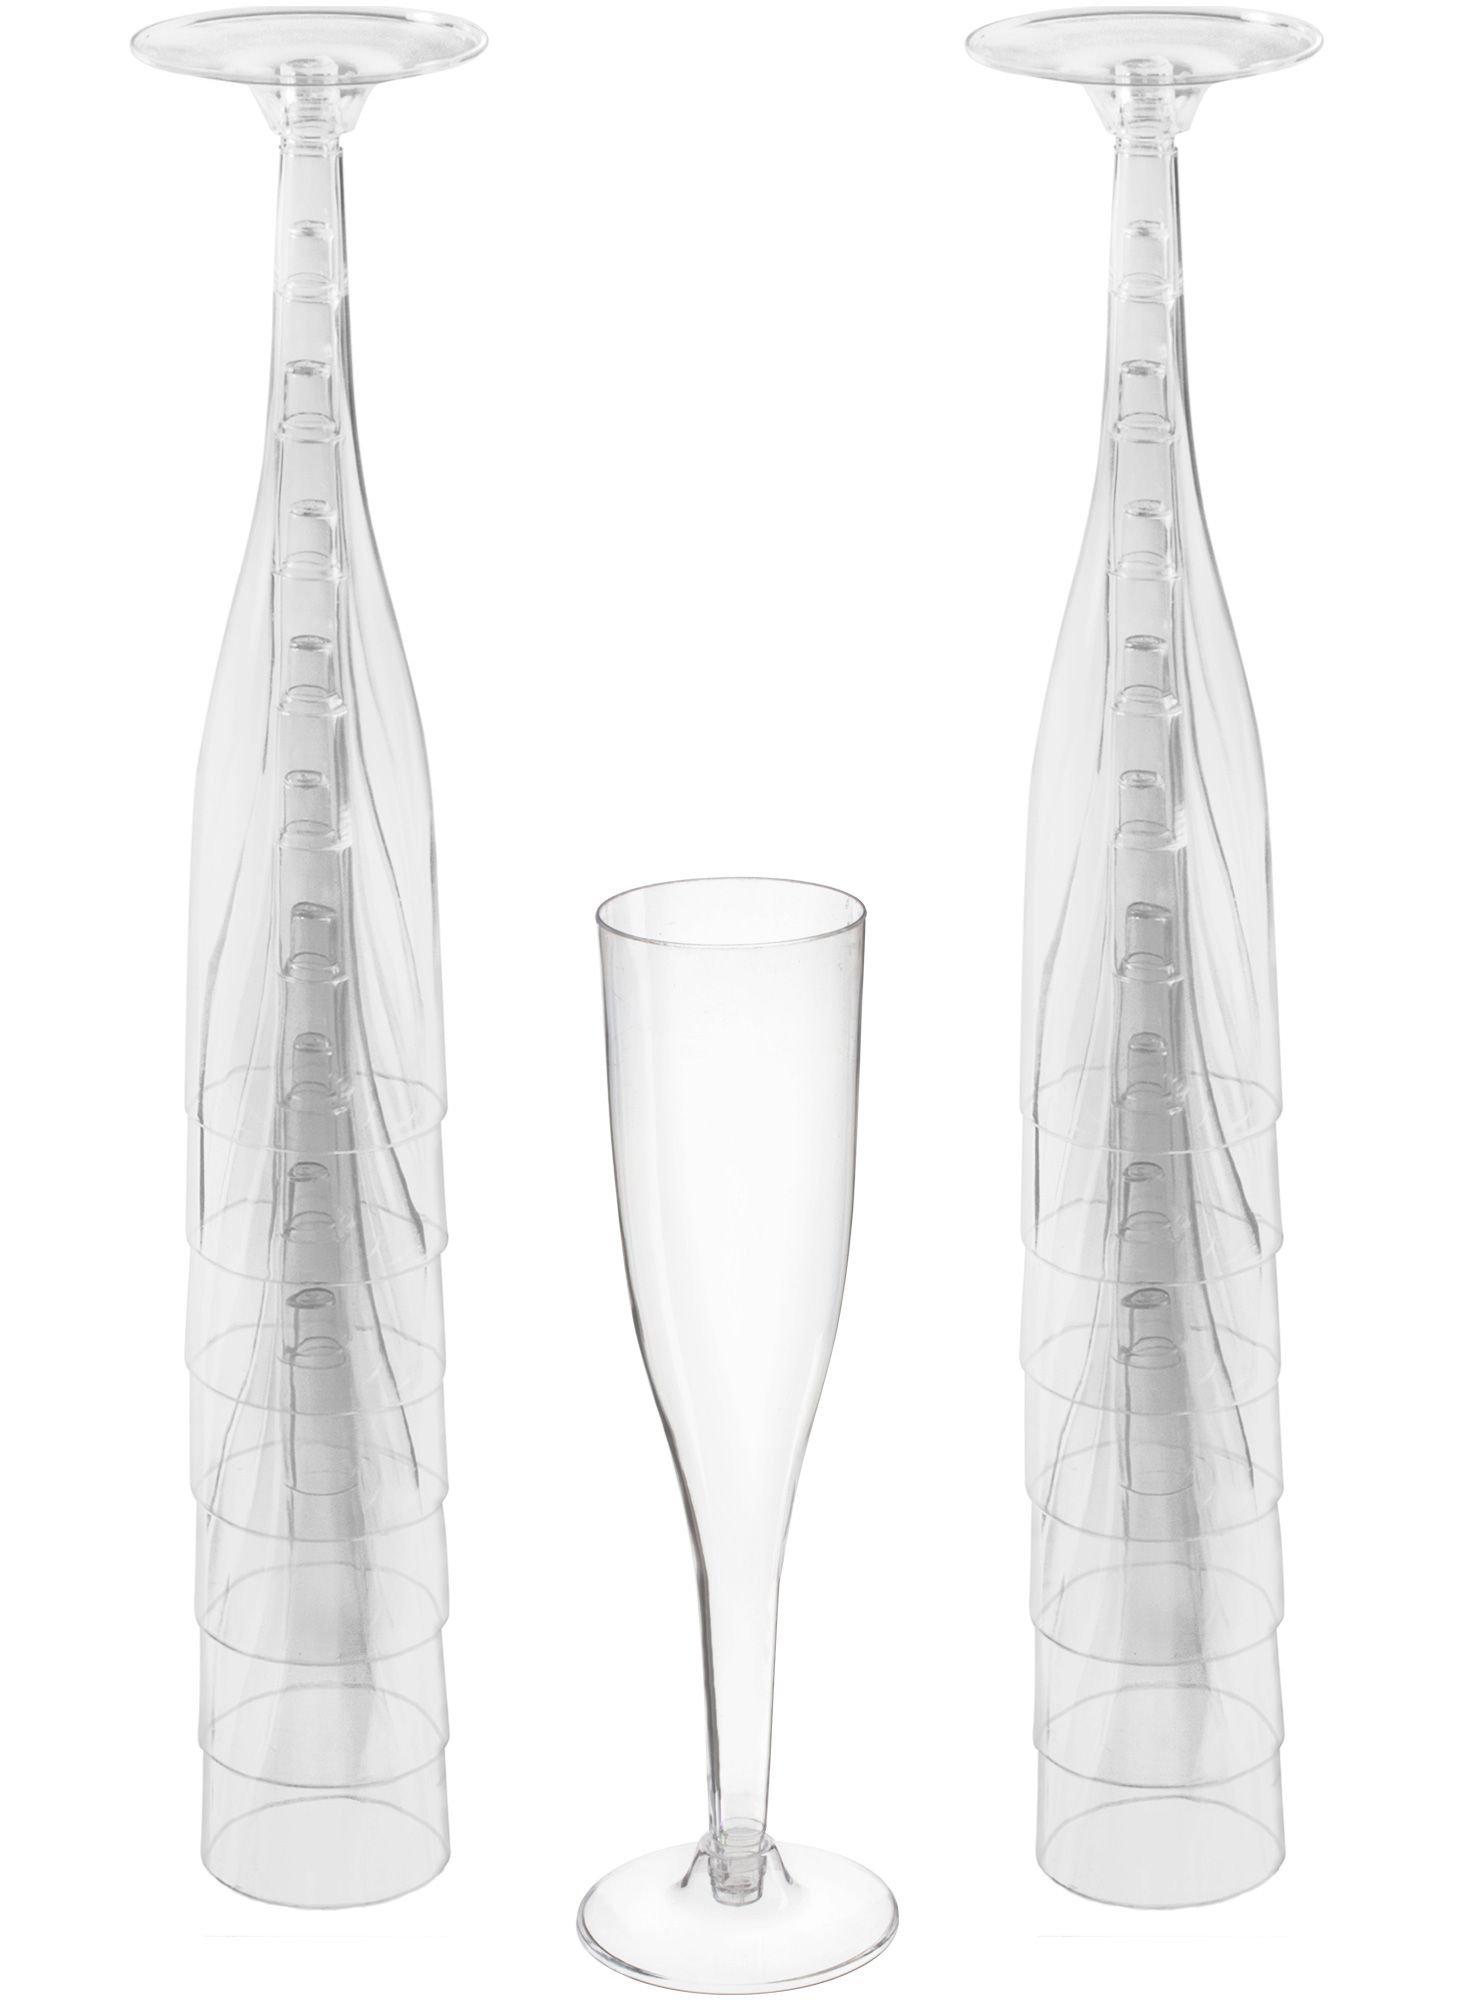 Clear Plastic Champagne Flutes, 5.5oz, 20ct